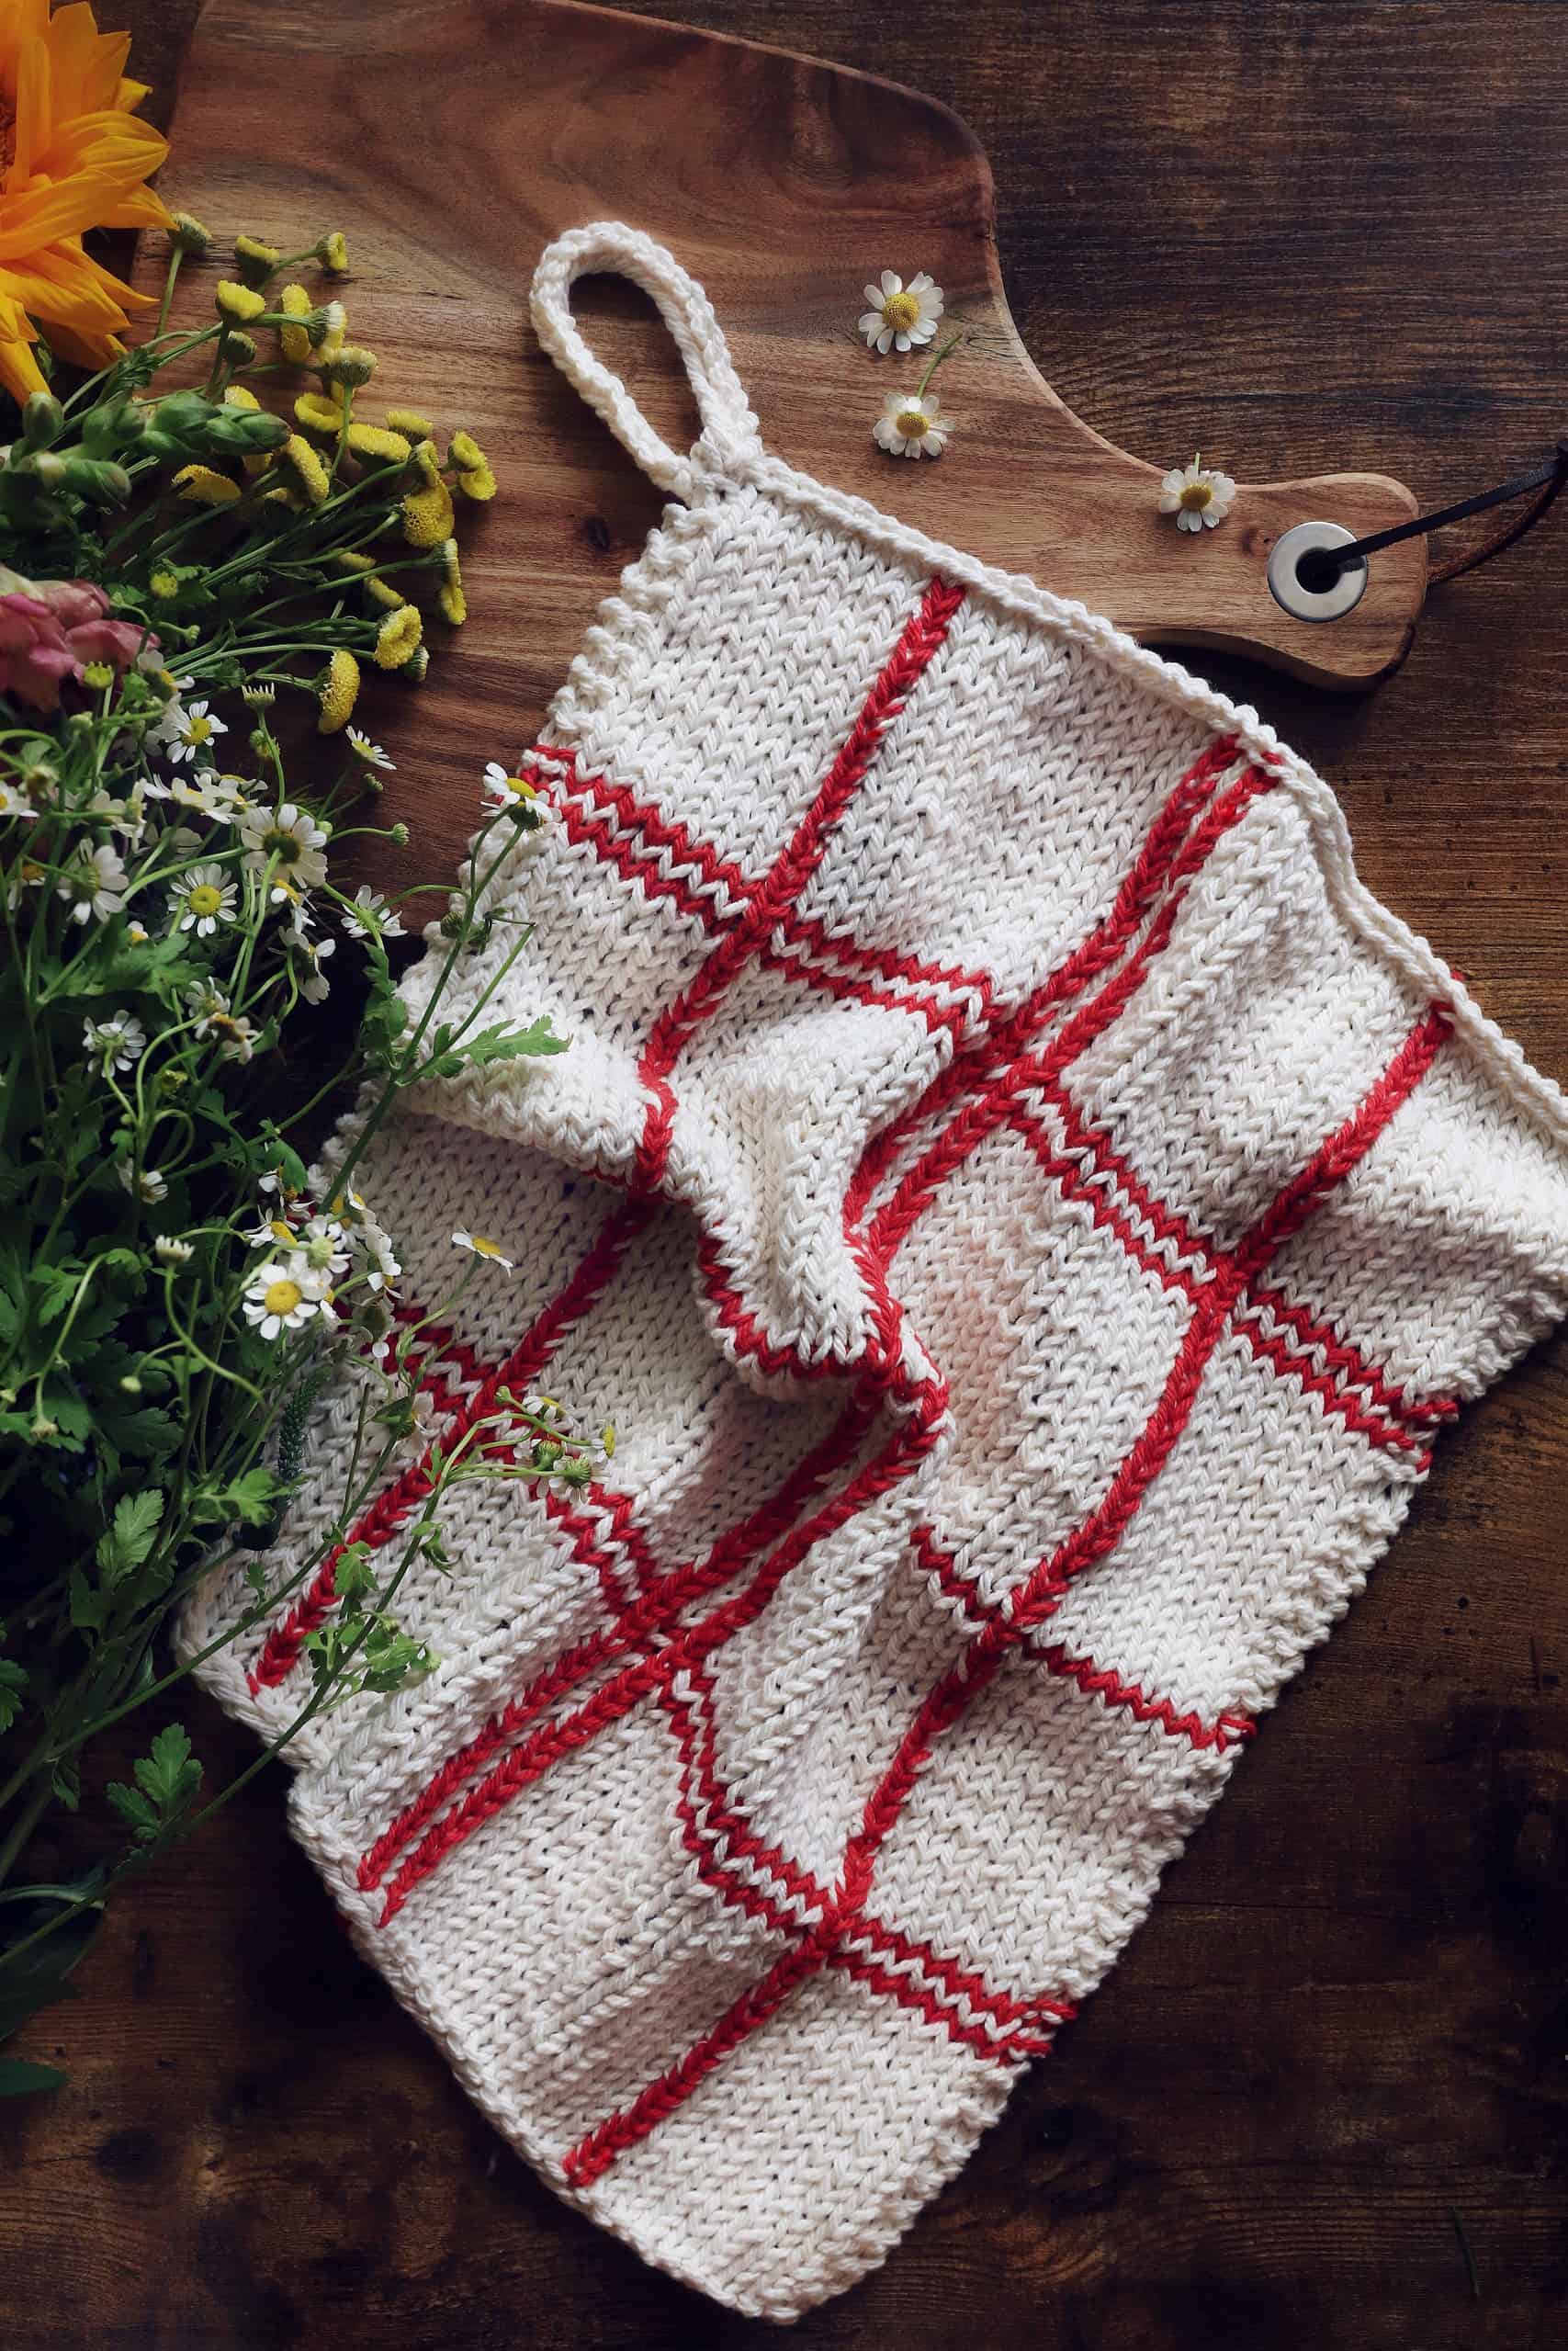 The Plaid Hand Towel Knitting Pattern